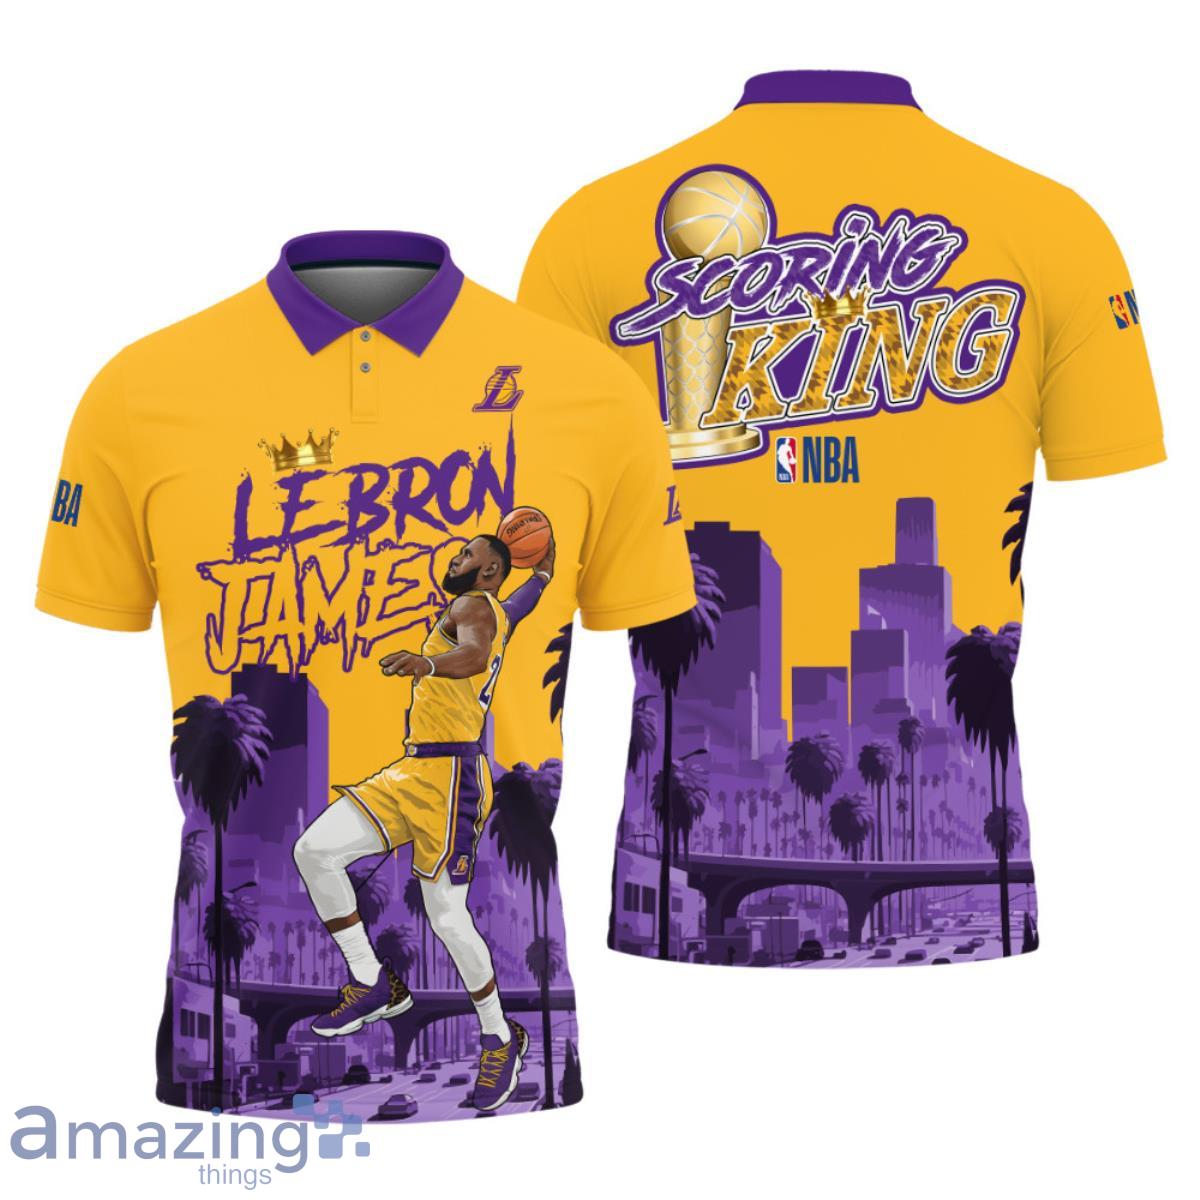 Lebron James Scoring King National Basketball Association Champions 2023 3D Polo Shirt Product Photo 1